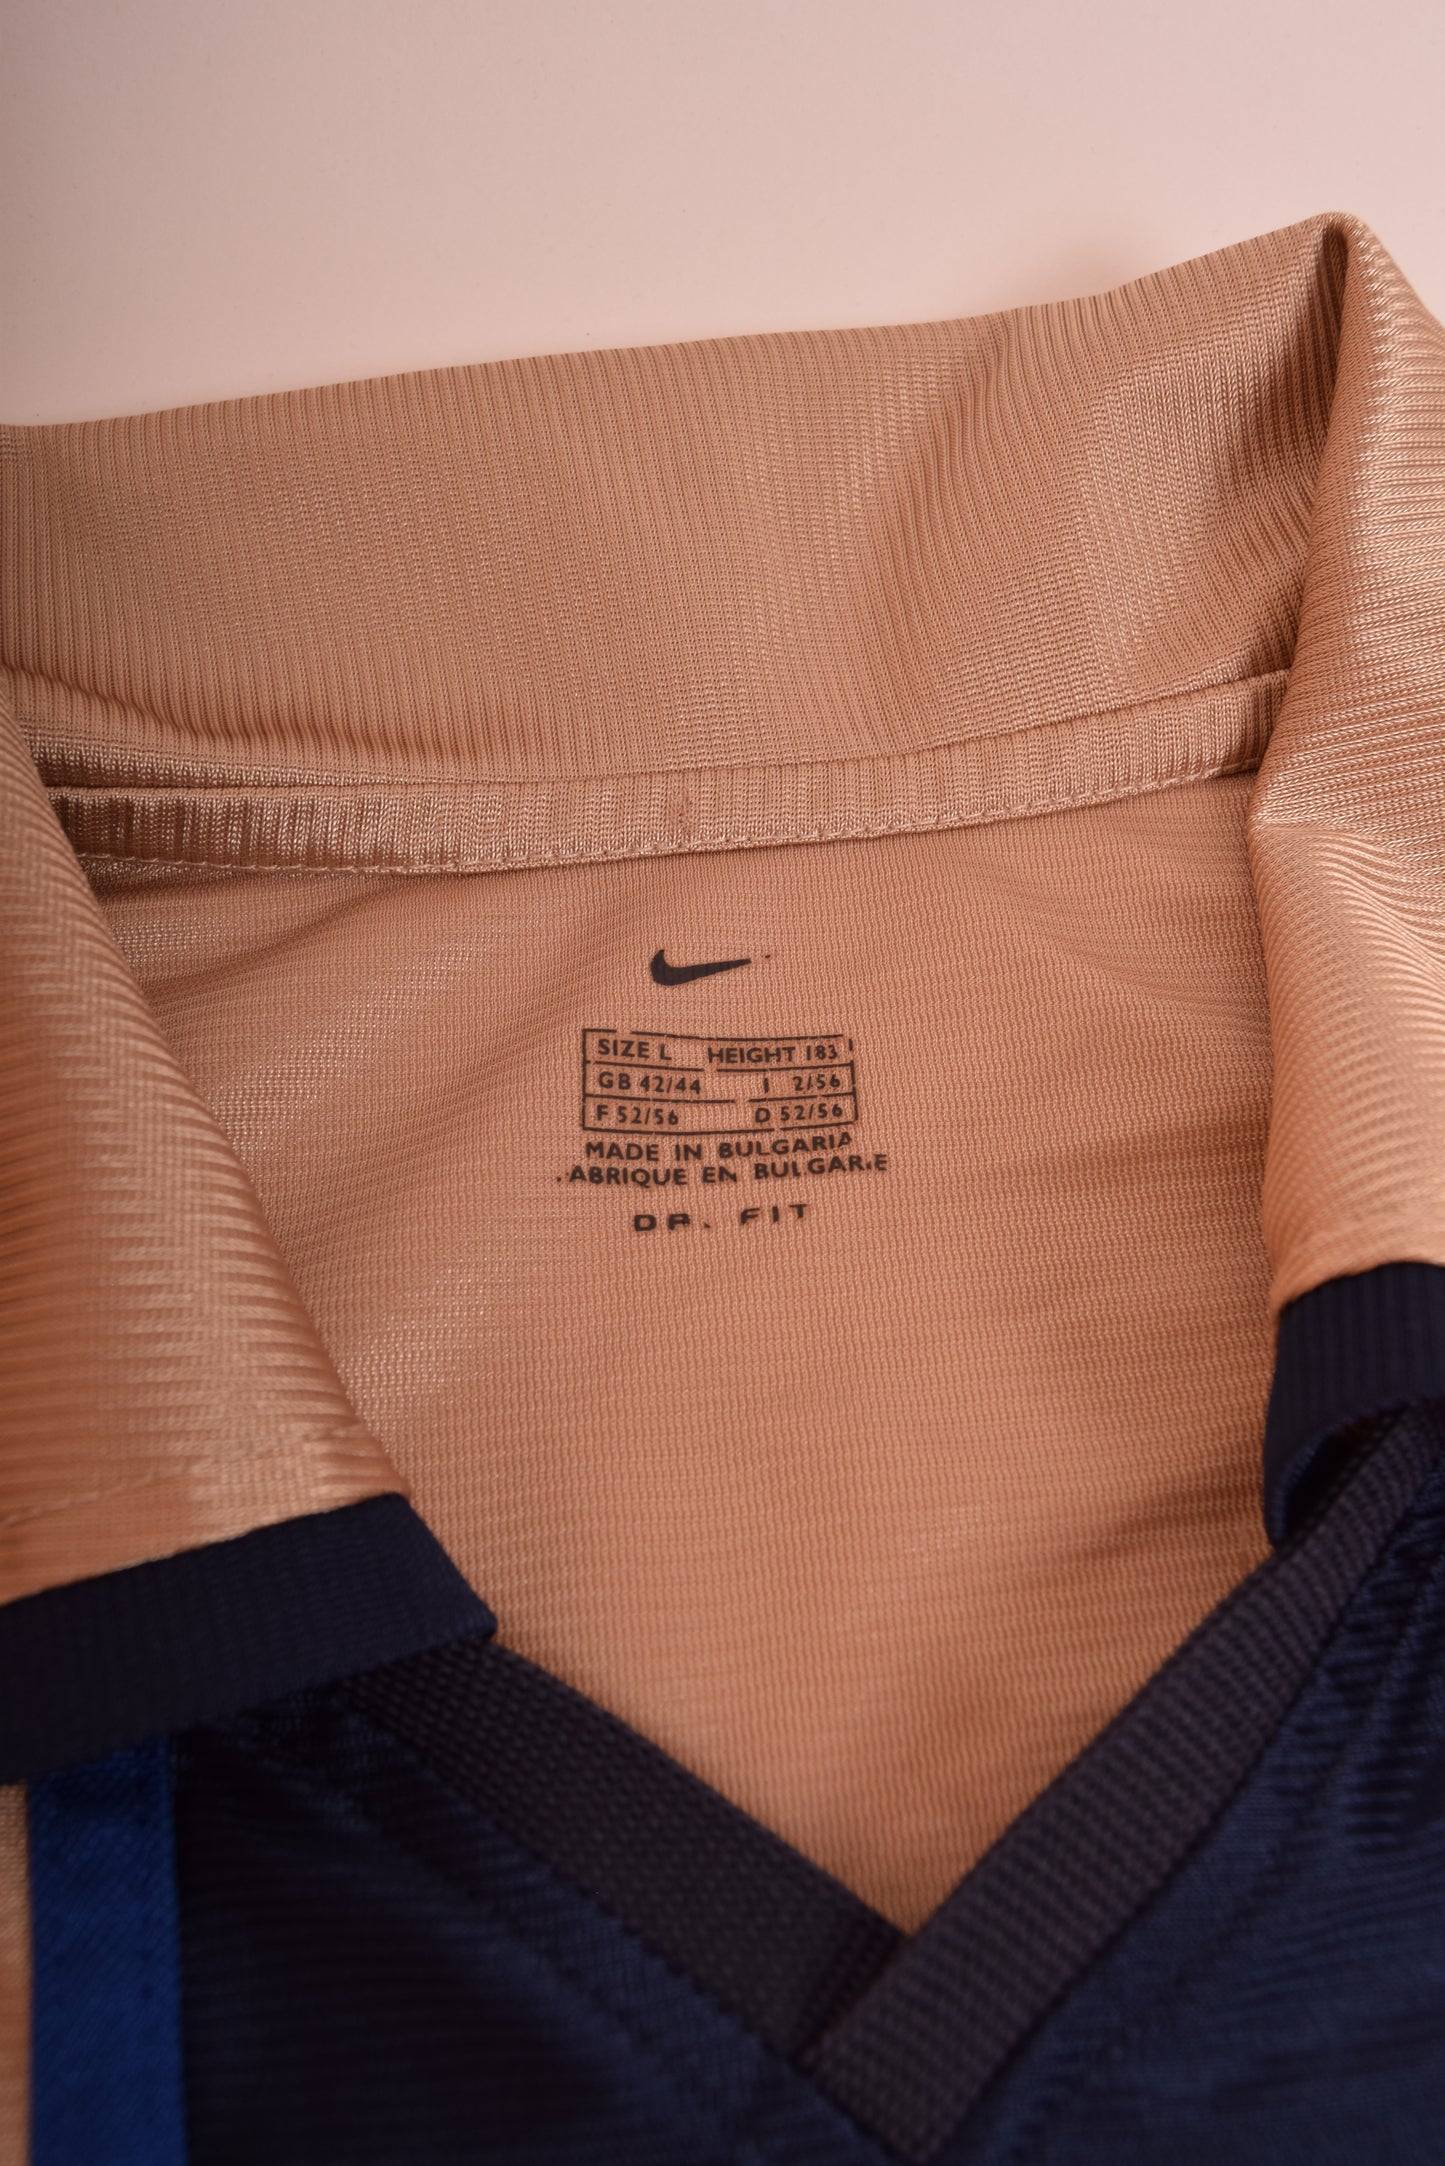 FC Barcelona Nike Away Football Shirt 2001-2002 Golden Blue Size L Dri Fit